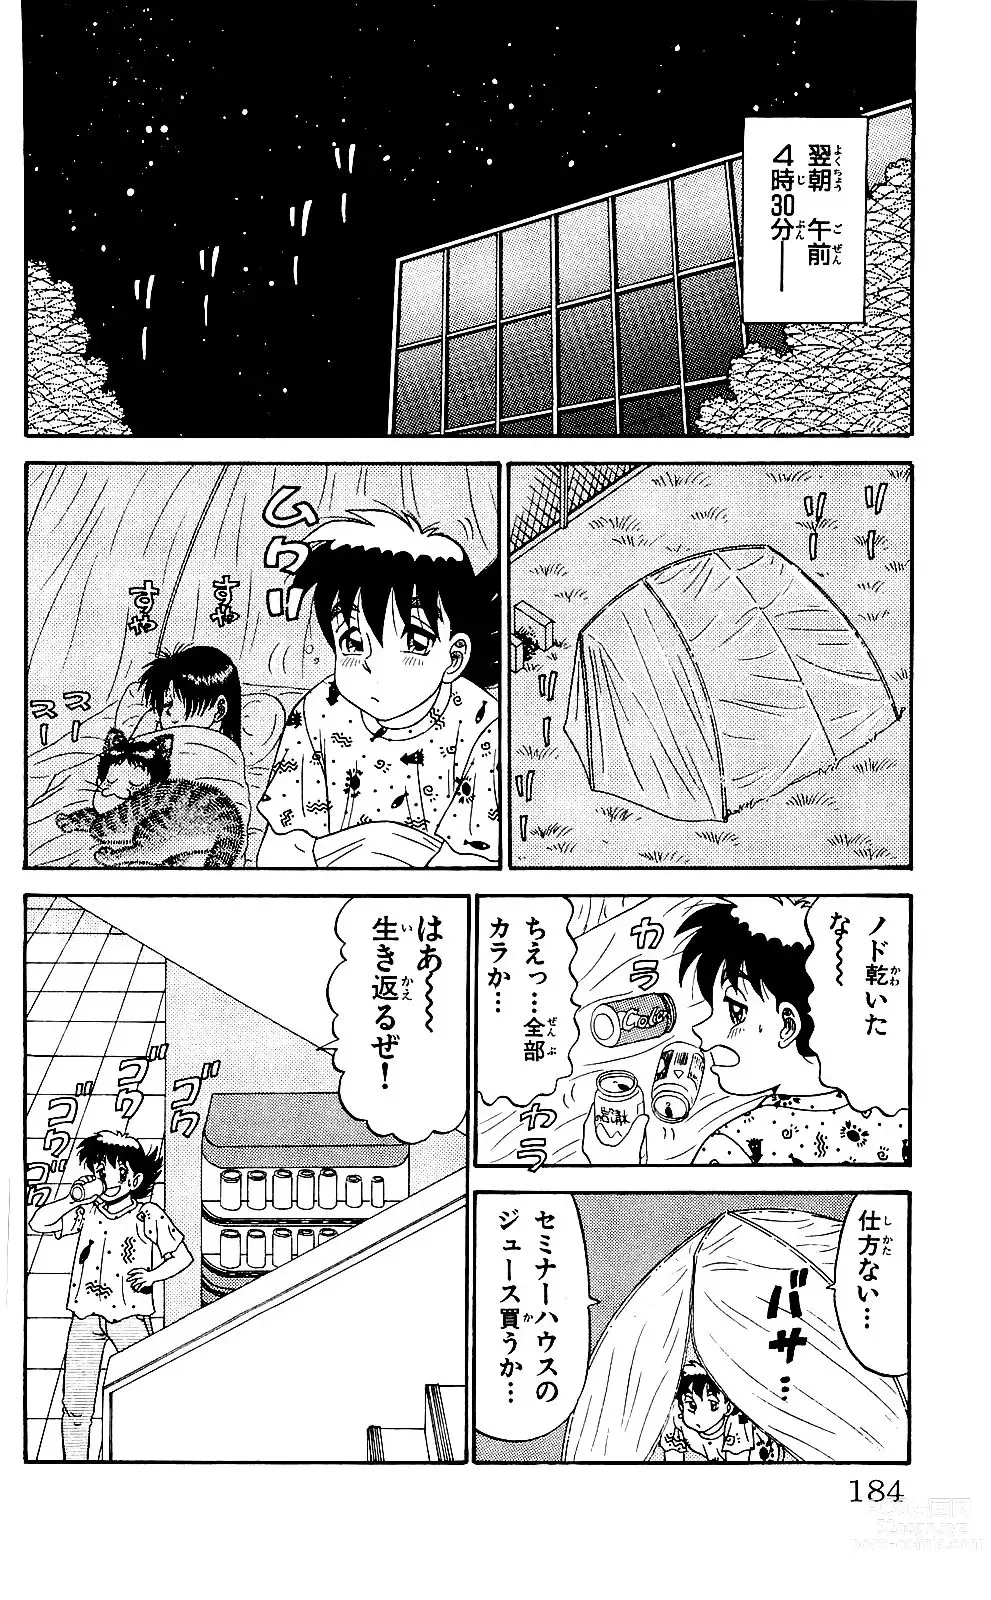 Page 182 of manga Orette Piyoritan 05